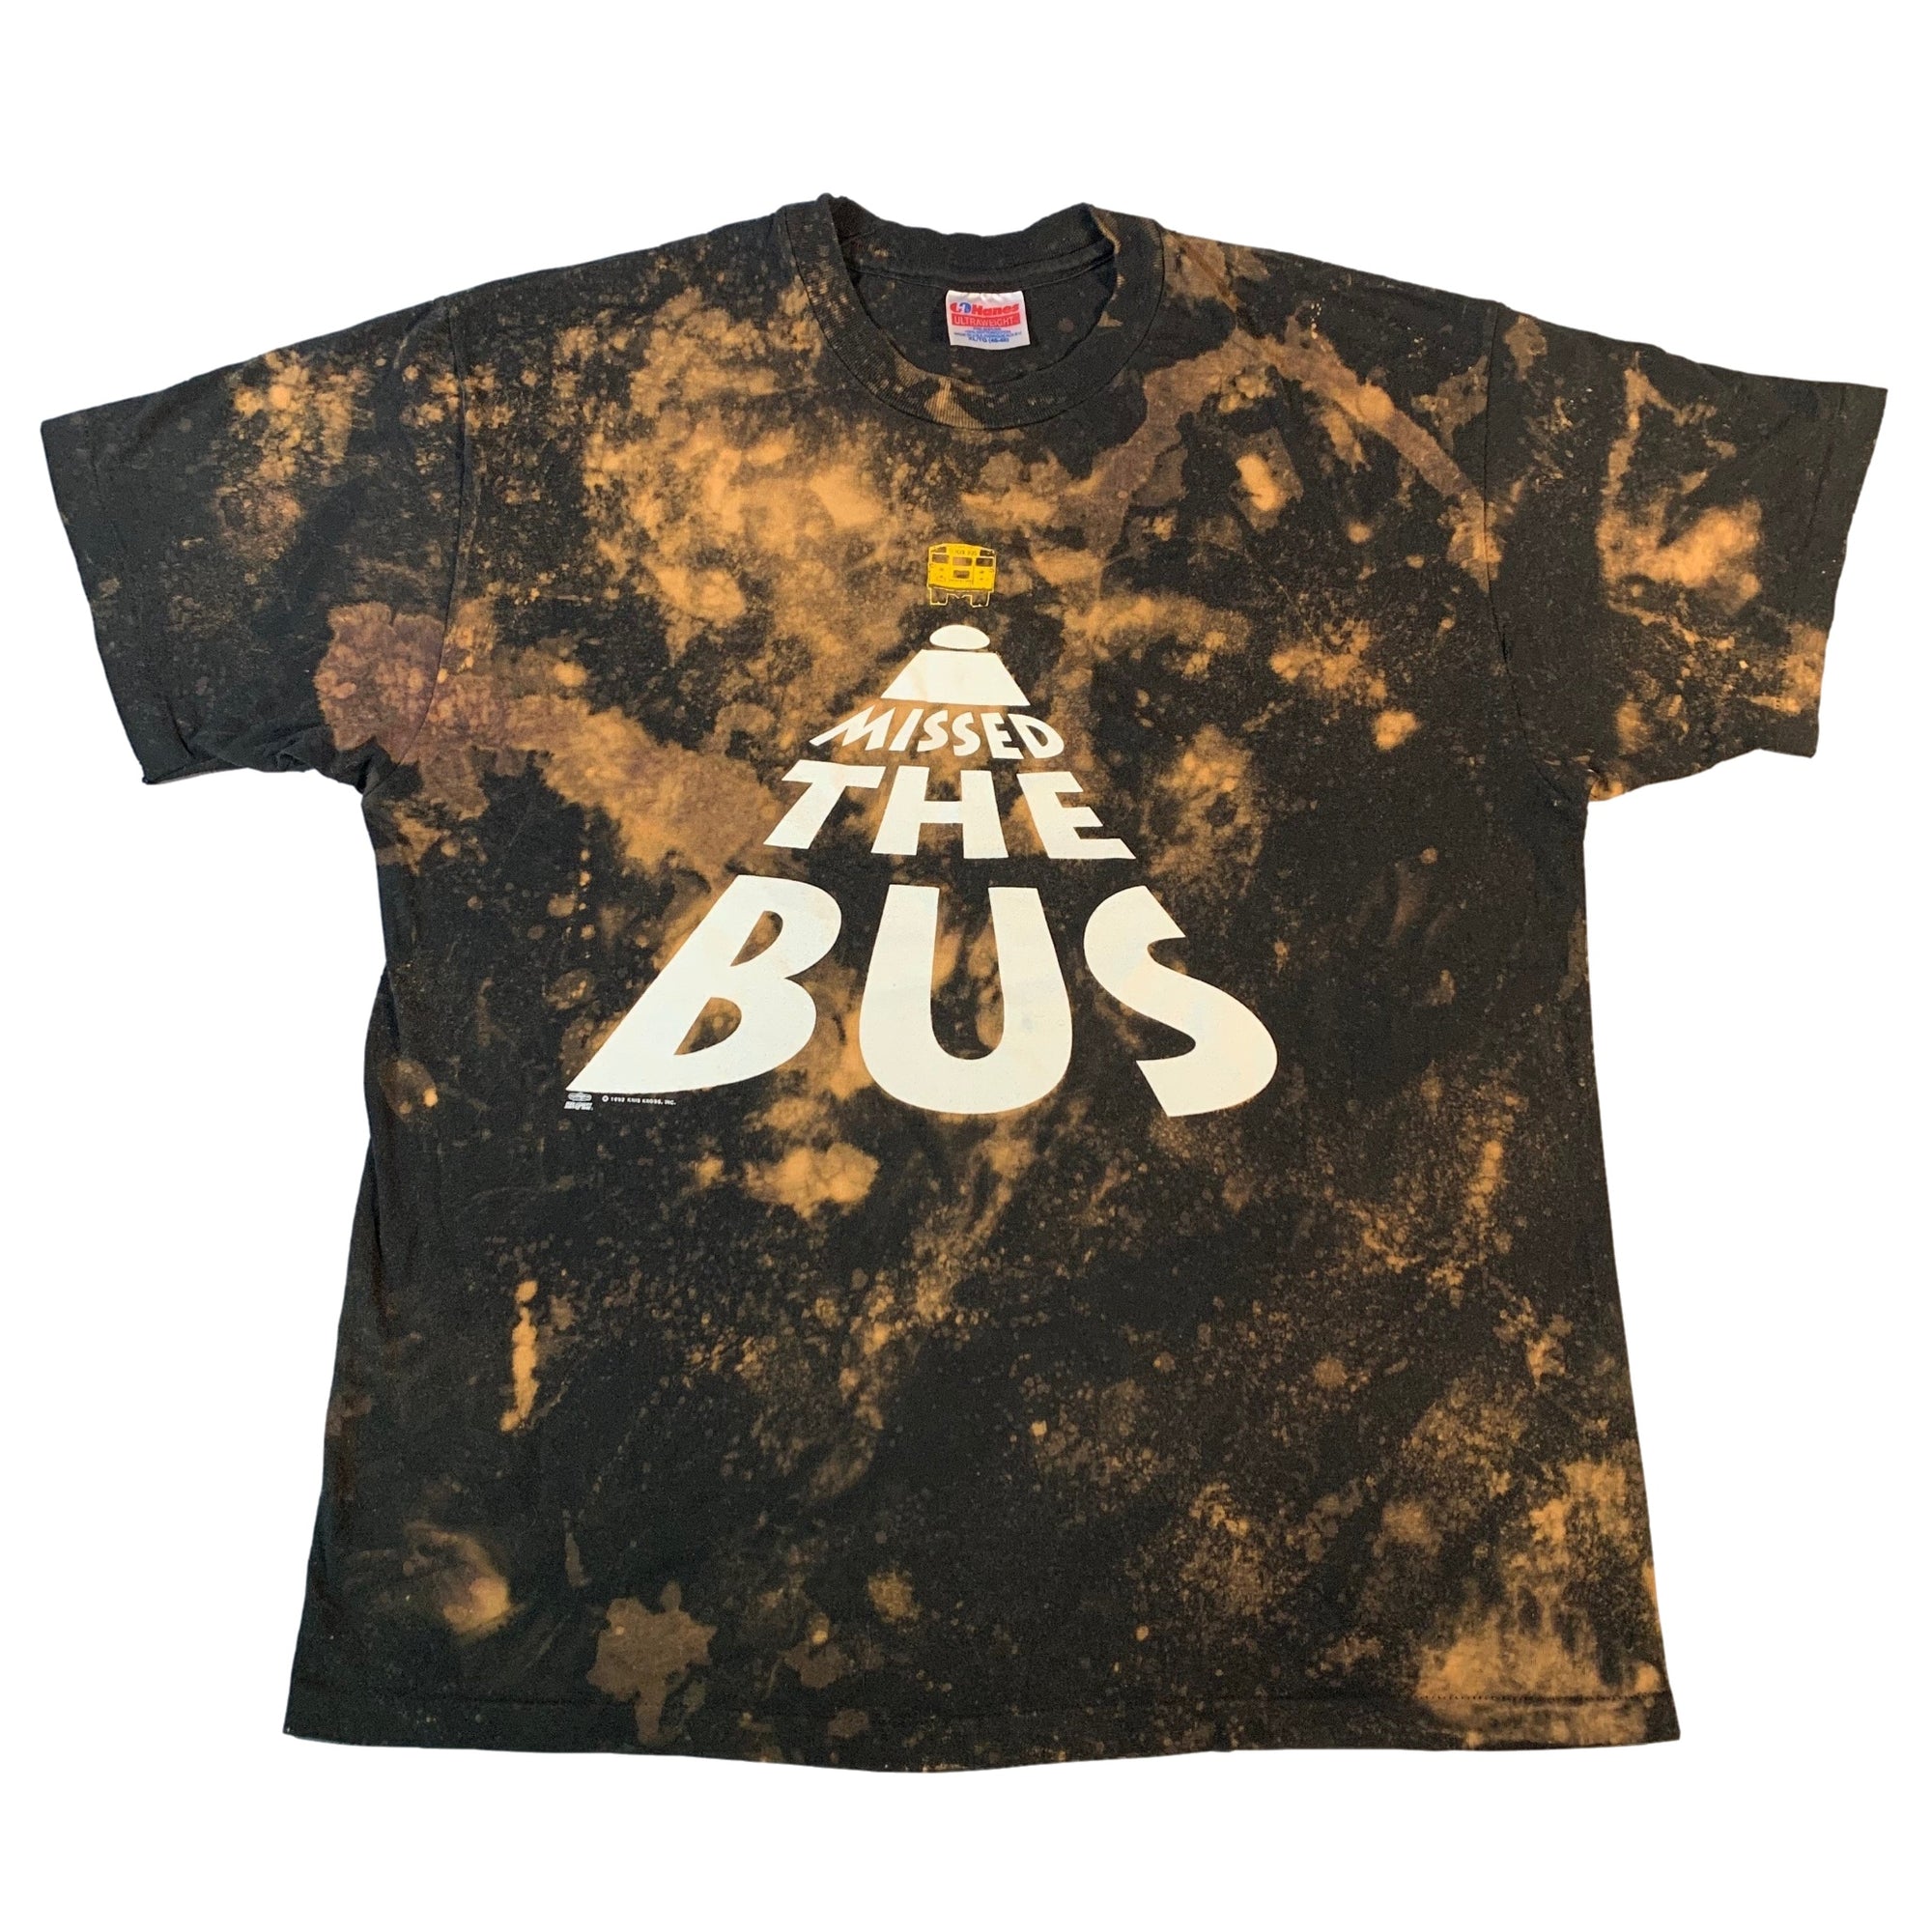 Vintage Kriss Kross "Missed The Bus" T-Shirt - jointcustodydc